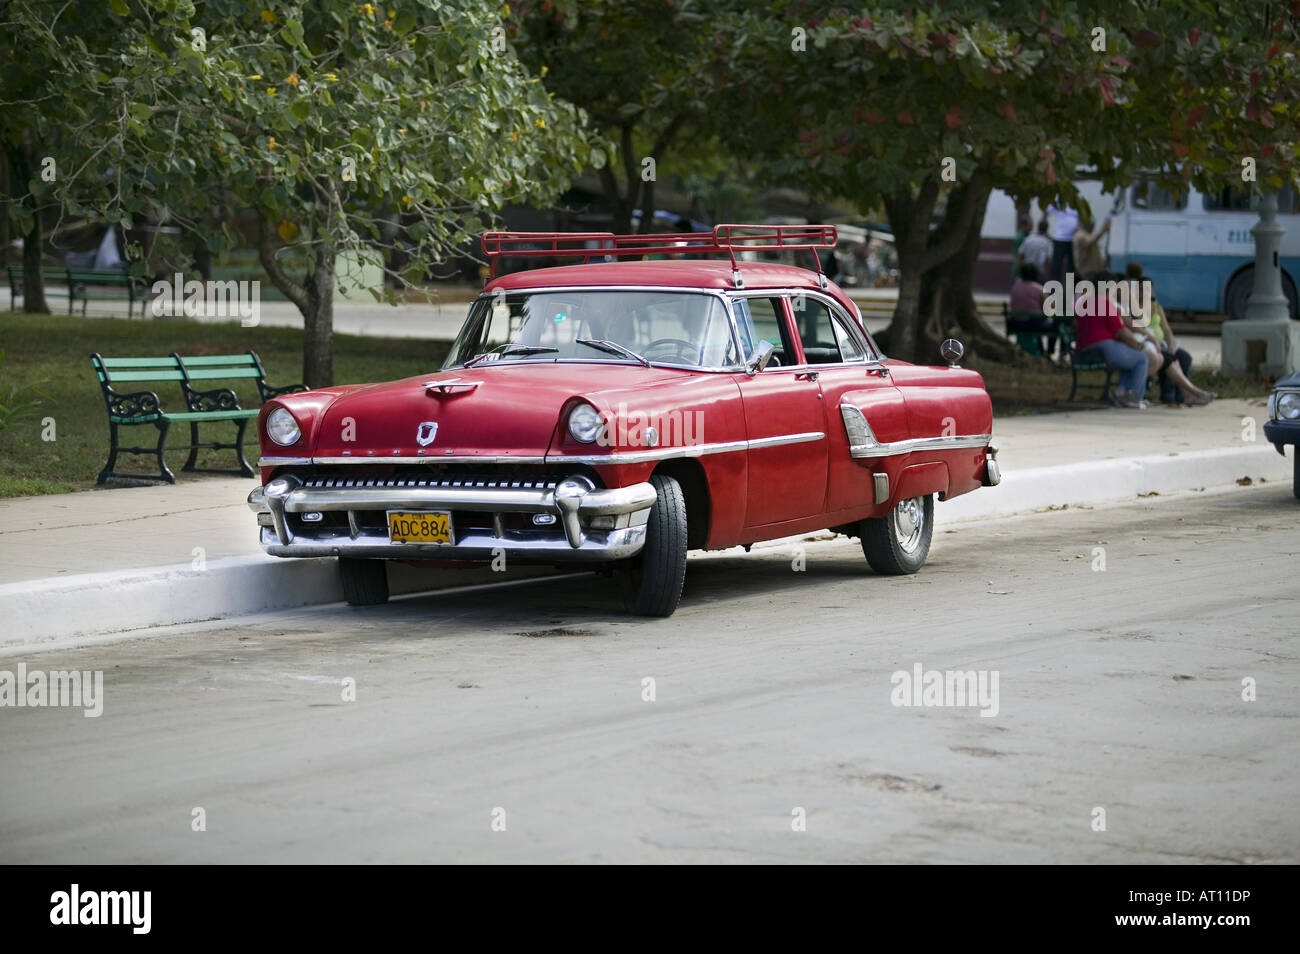 Alte amerikanische Chevy (Chevrolet) sitzt in Moran (Kuba) geparkt. Amerikanische Oldtimer sind in Kuba gesehen. Stockfoto